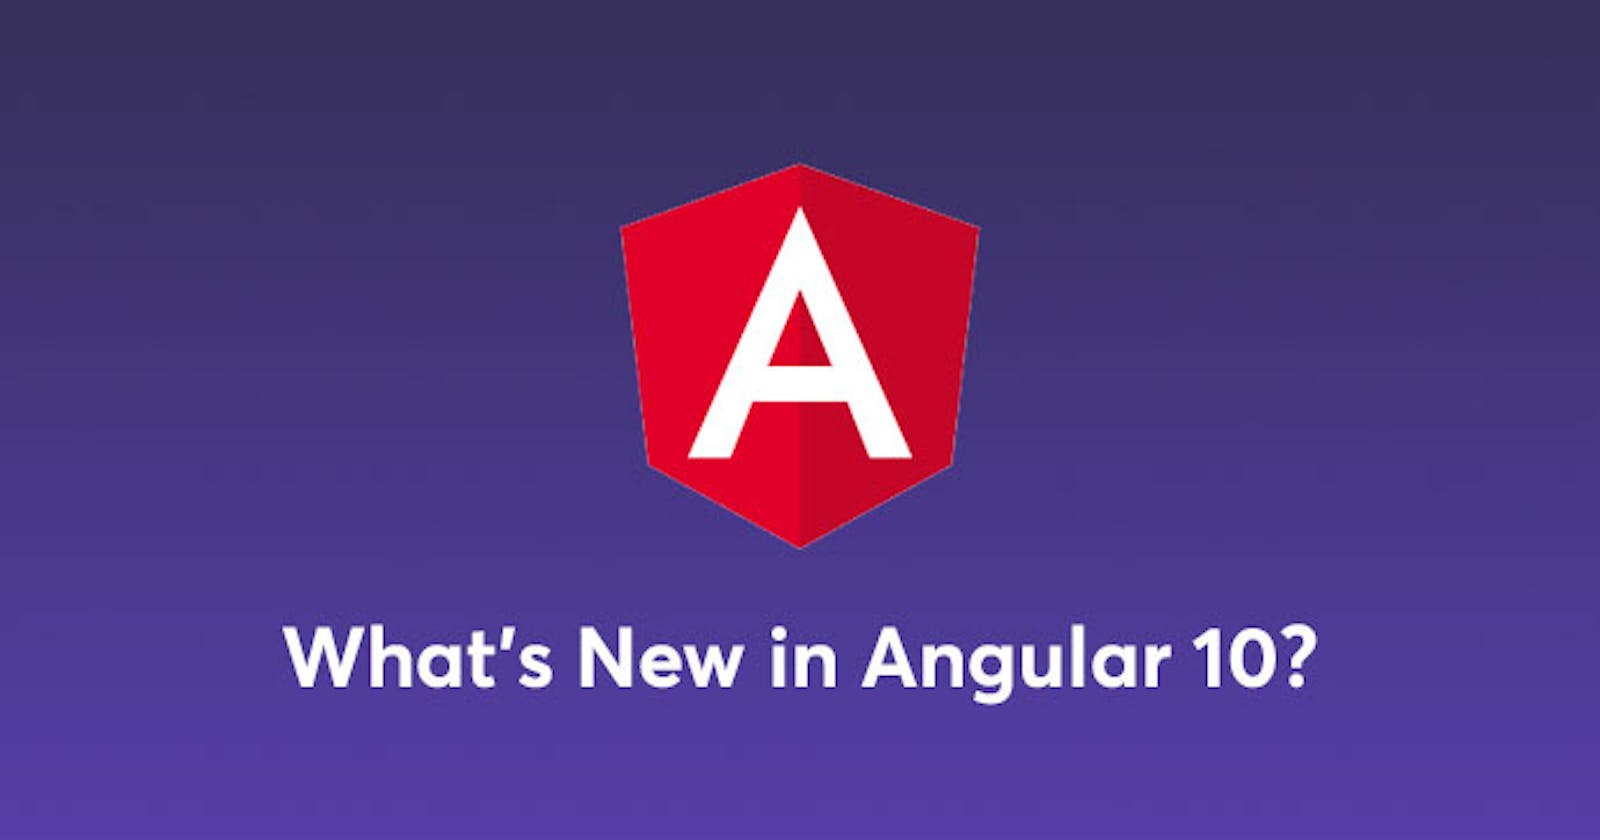 What’s New in Angular 10?